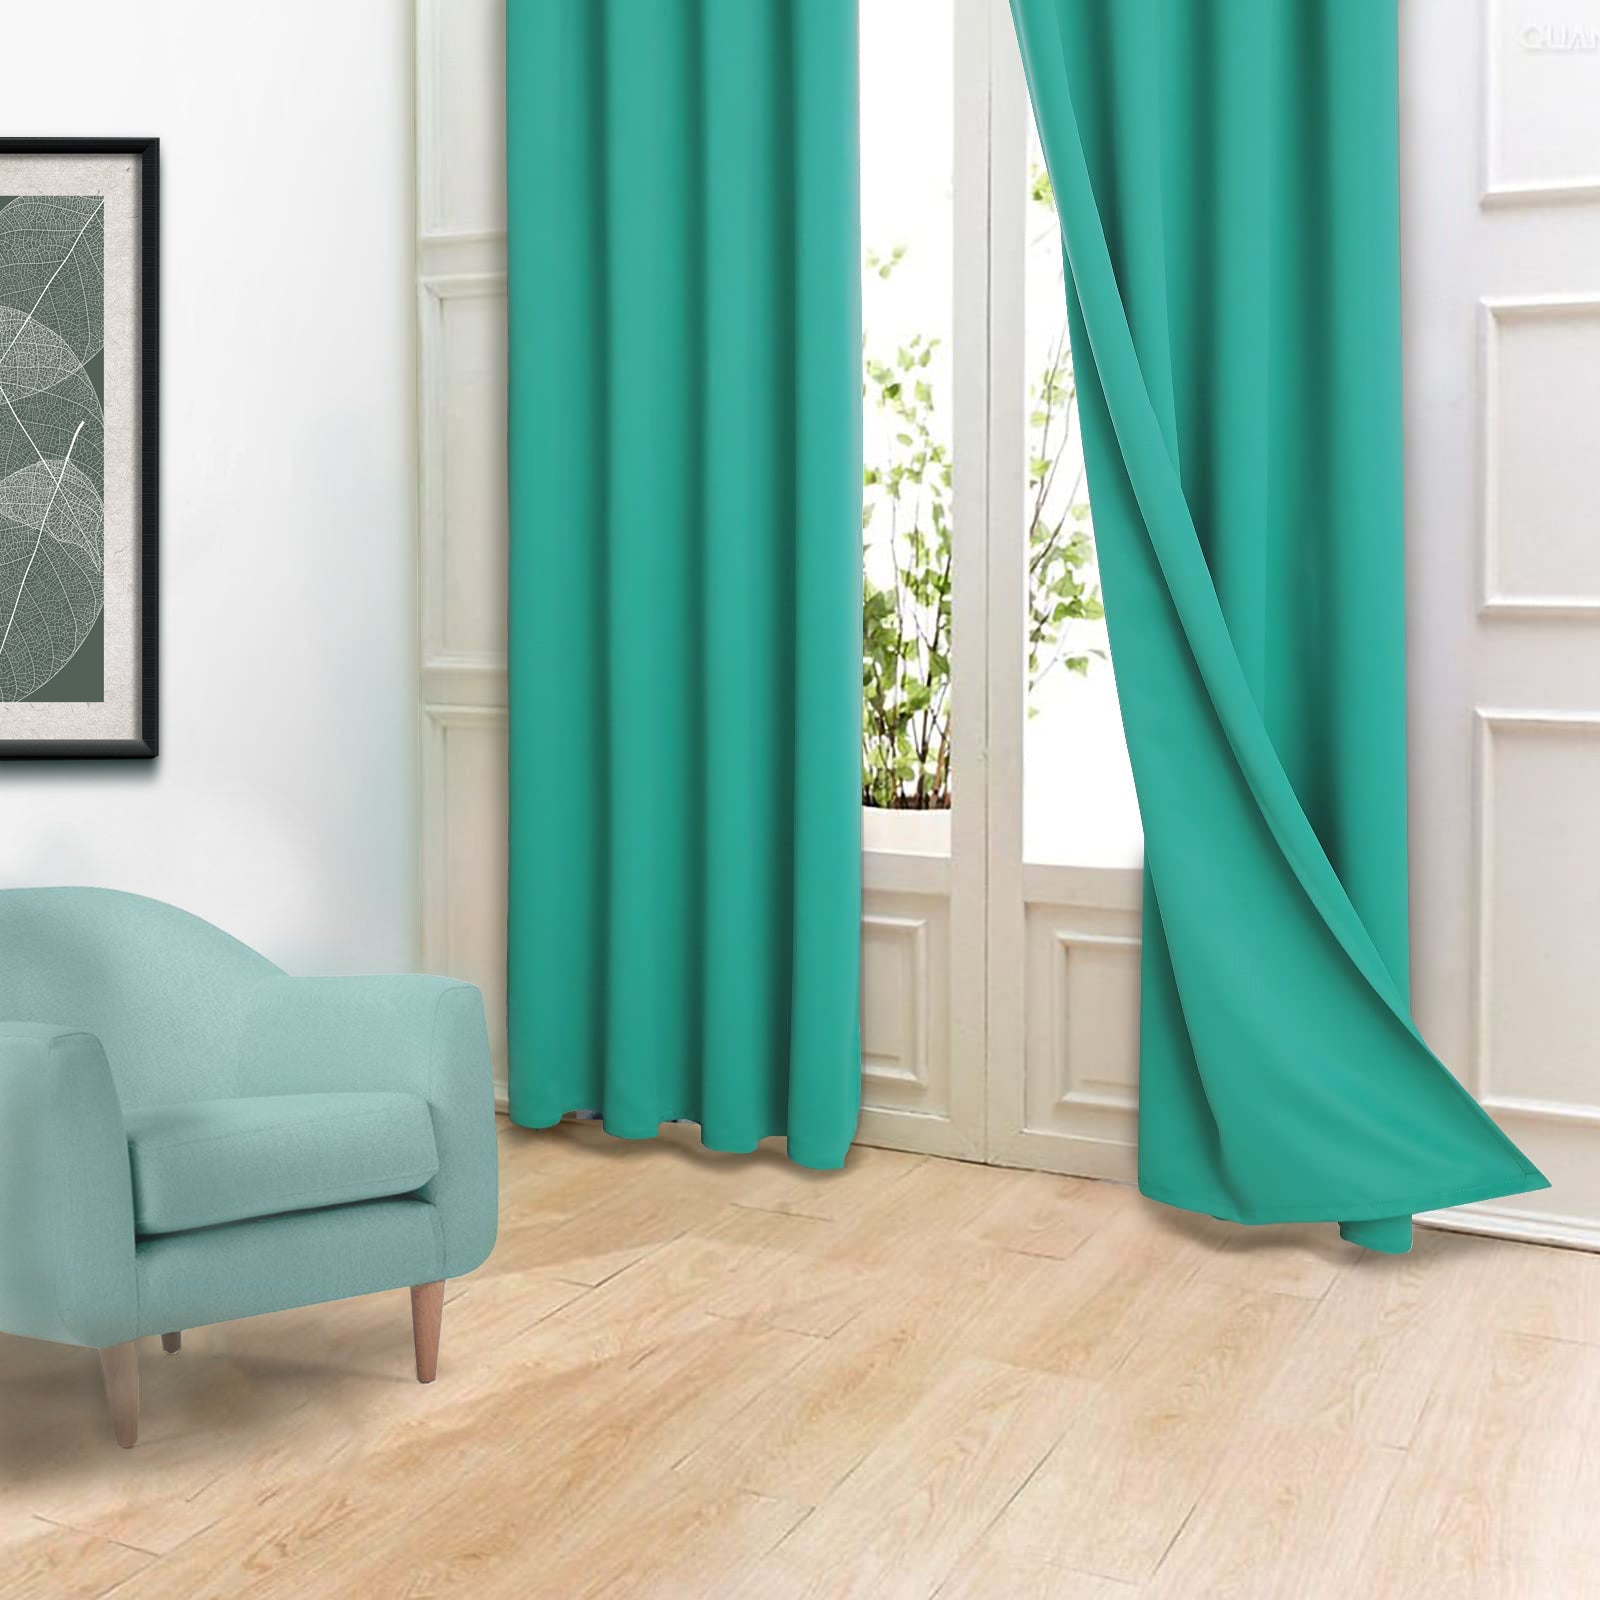 Akarise Blackout Curtains for Bedroom Living Room - 2 Panels,Teal